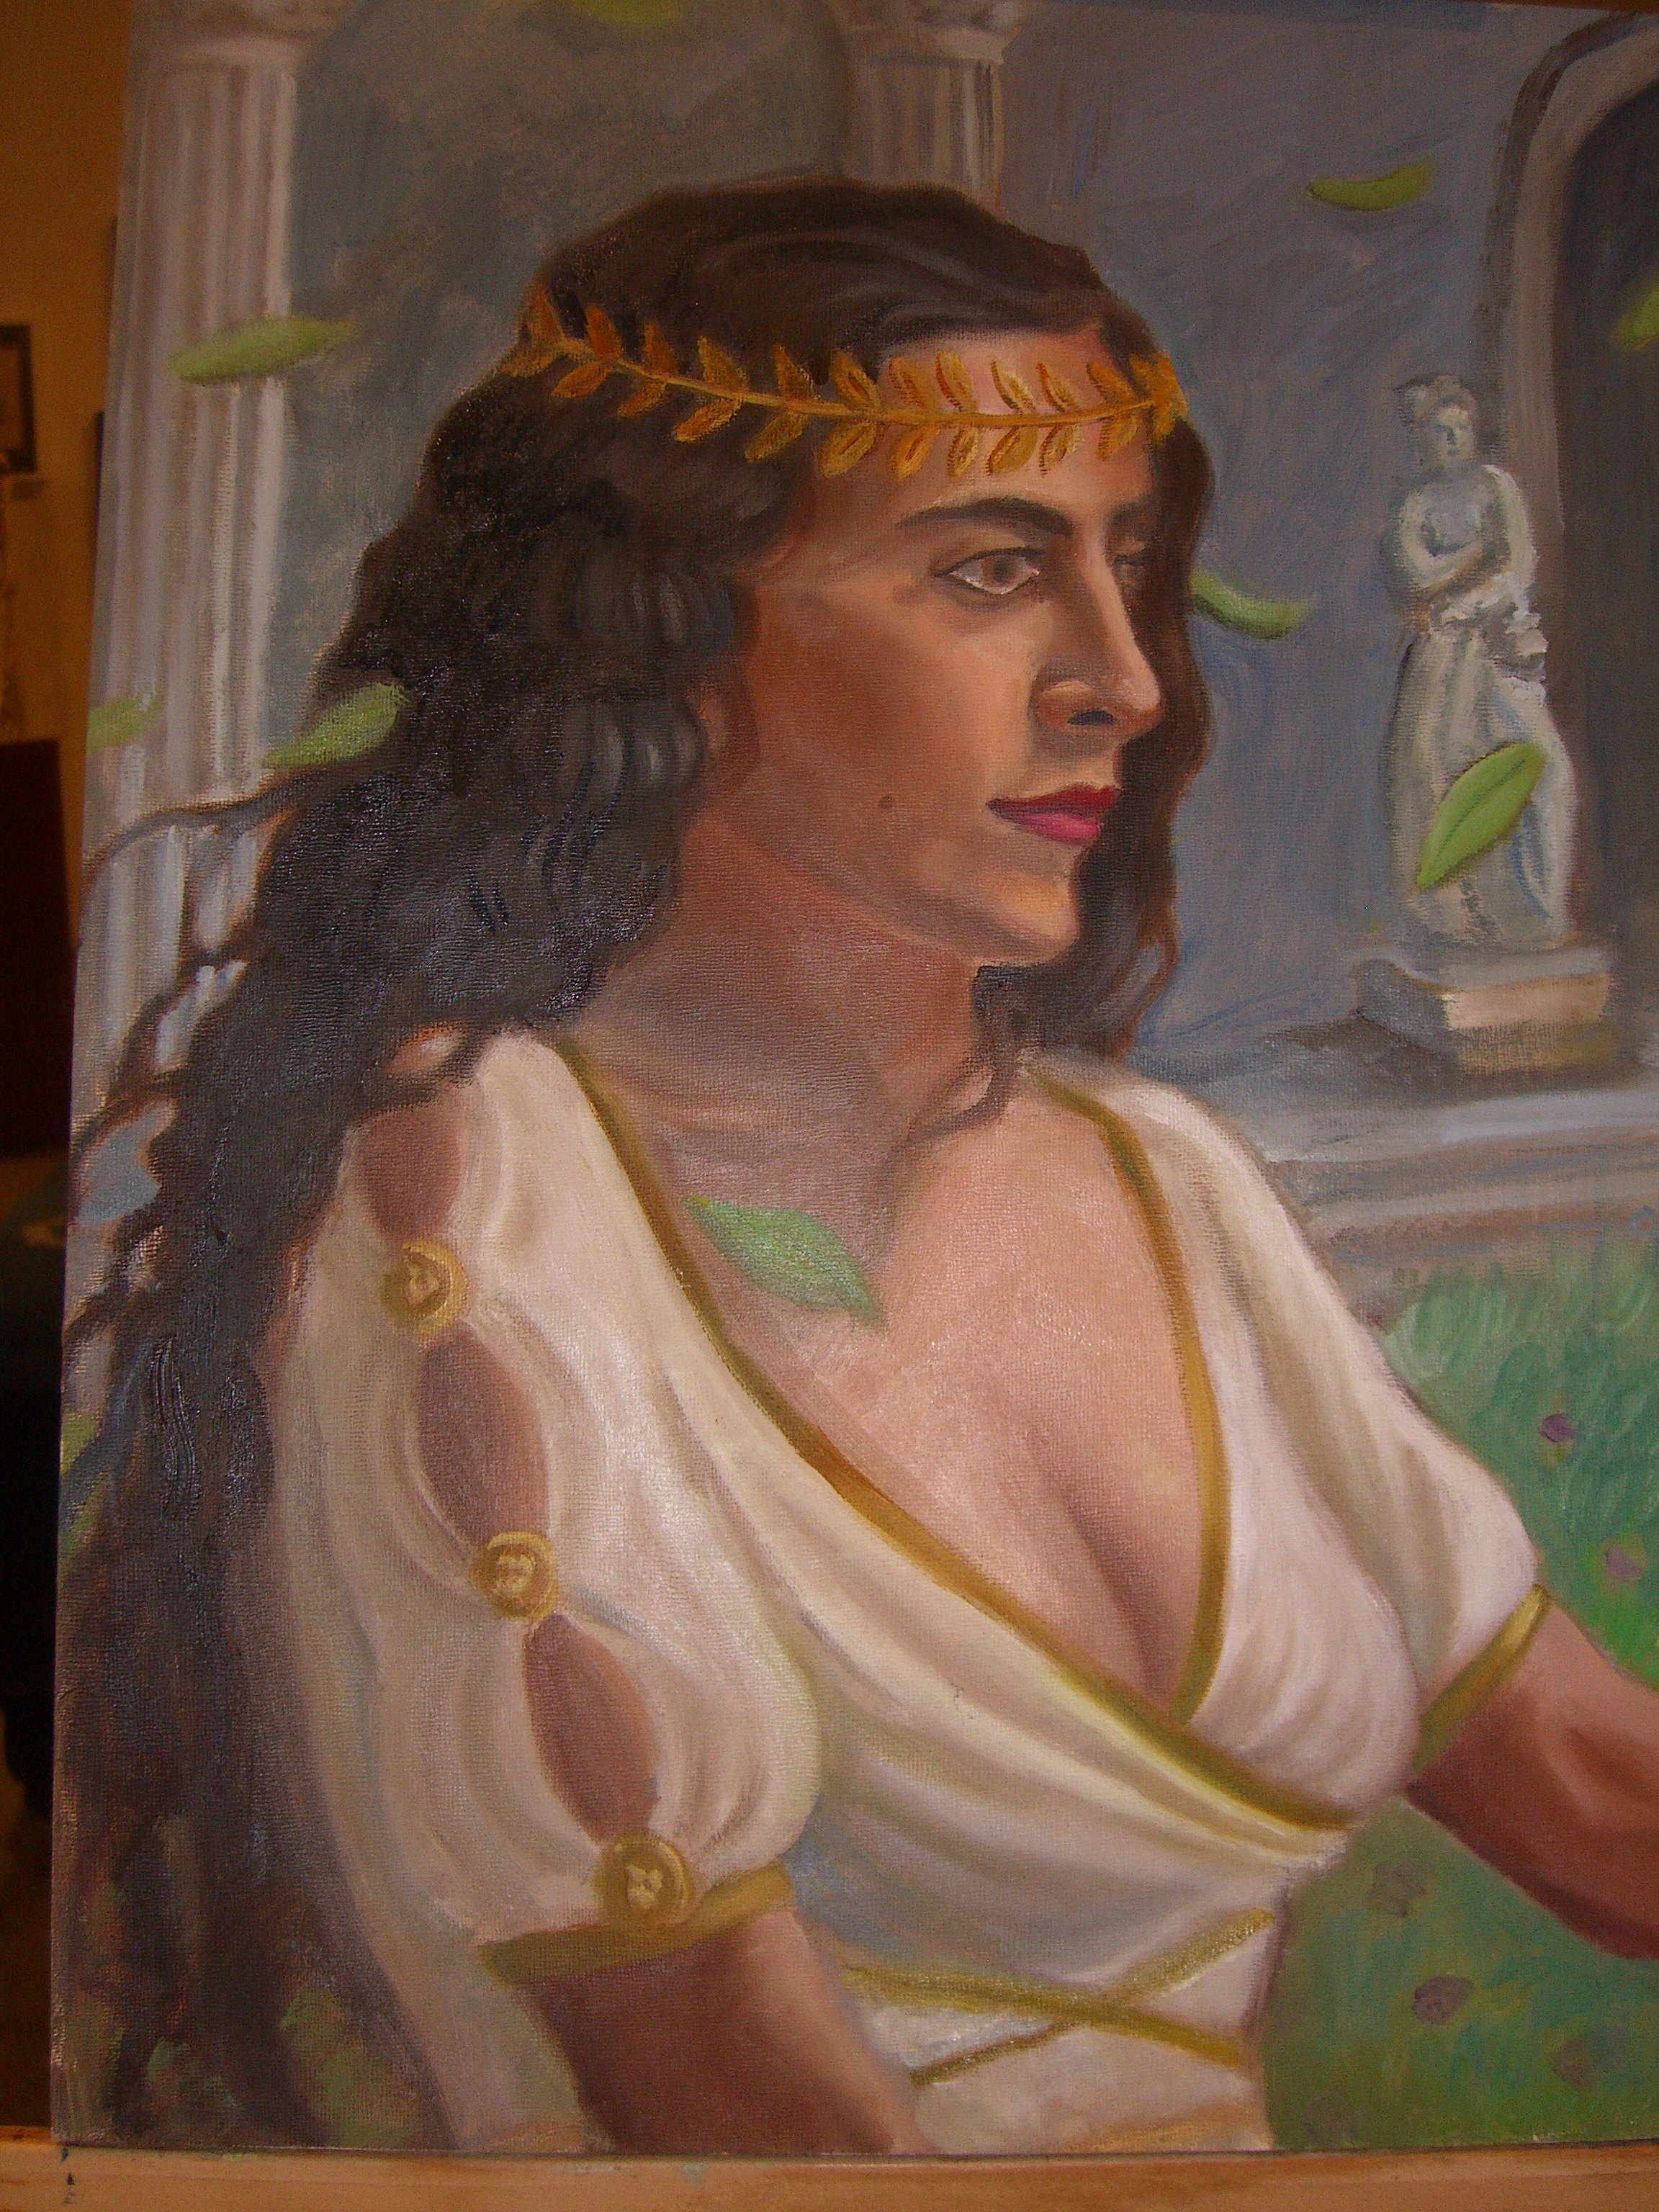 Painting as a Greek/Roman by an artist named Michelle Julea Lee.